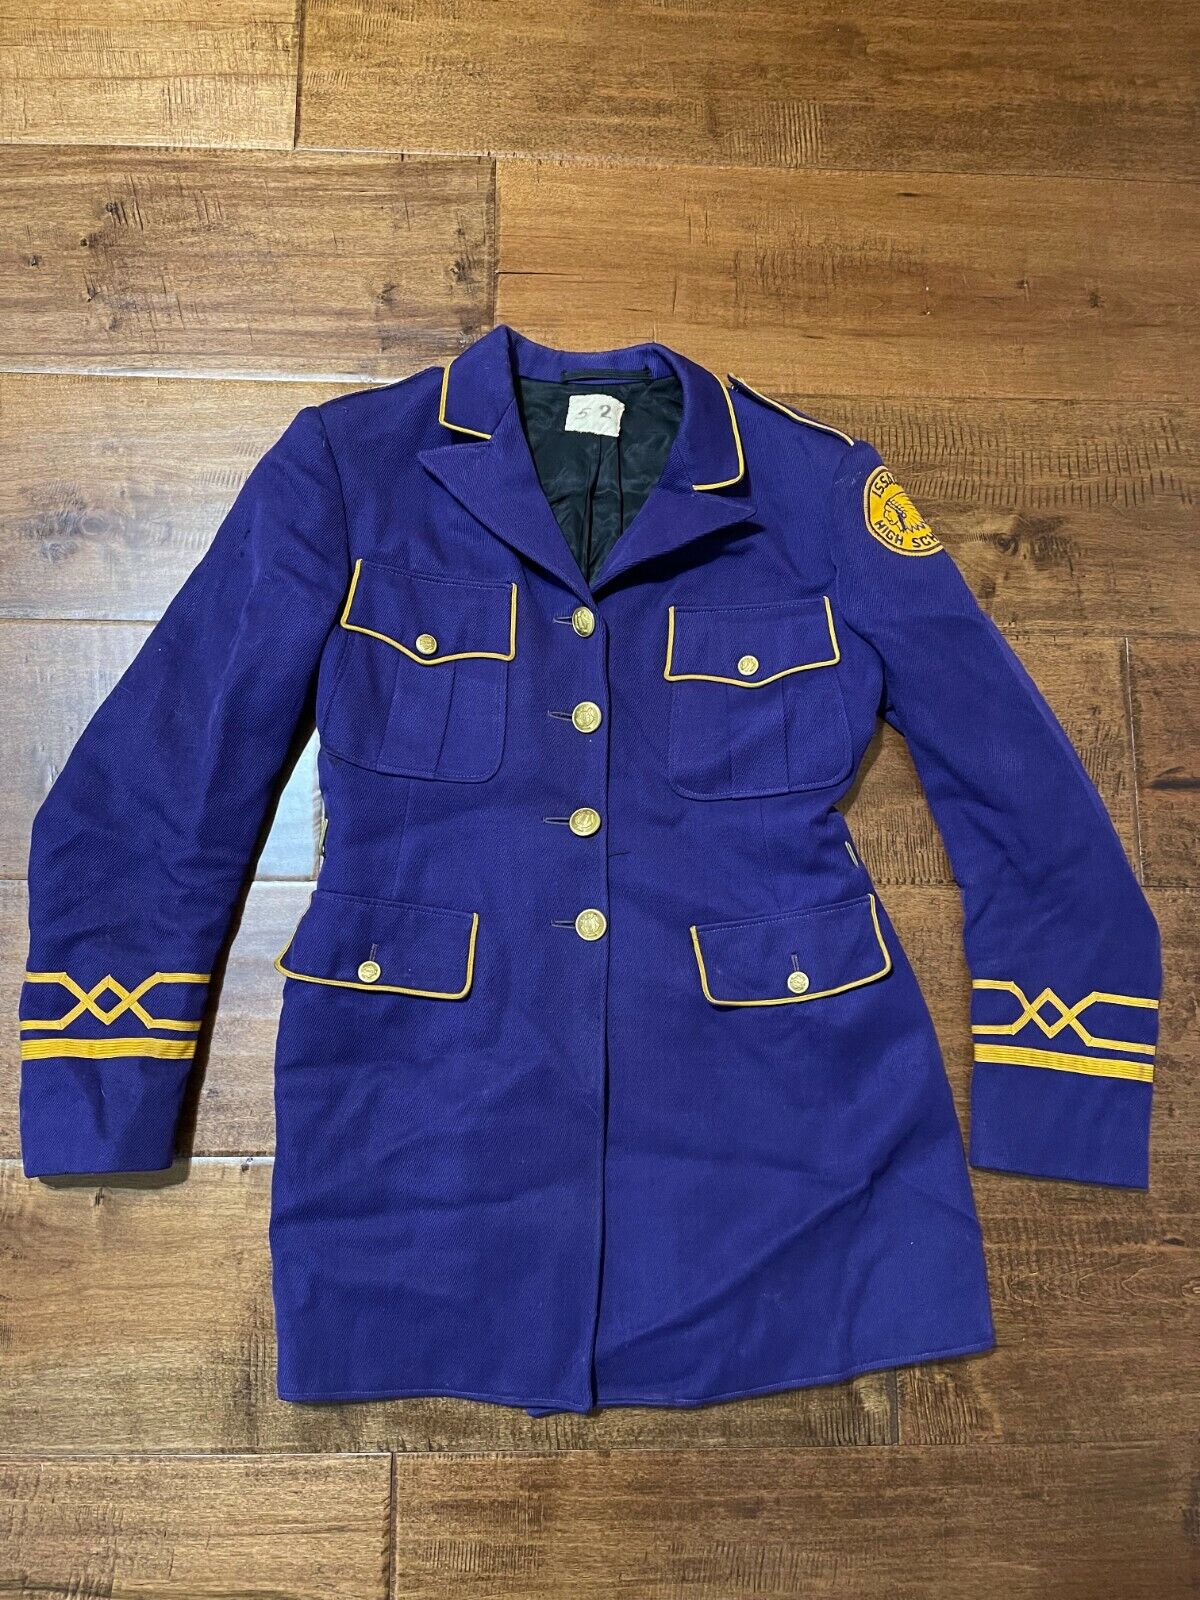 Vintage Issaquah High School Marching Band Washington State Purple Jacket Coat